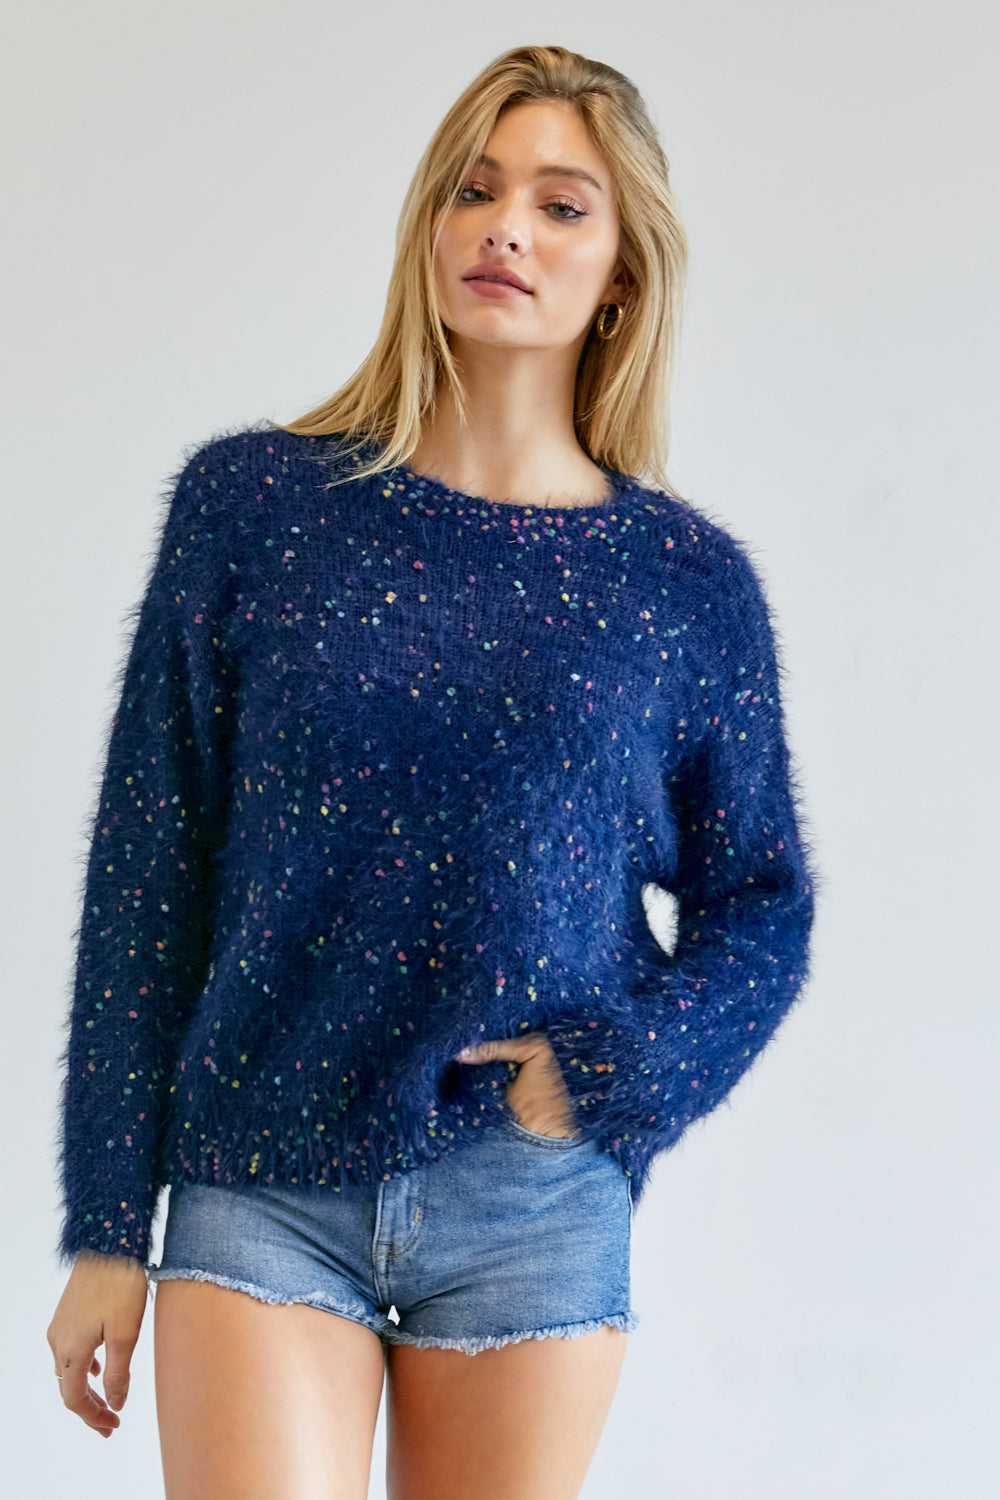 Cute Multi Color Polak Dot Sweater Cute Multi Color Polak Dot Sweater - M&R CORNER M&R CORNER